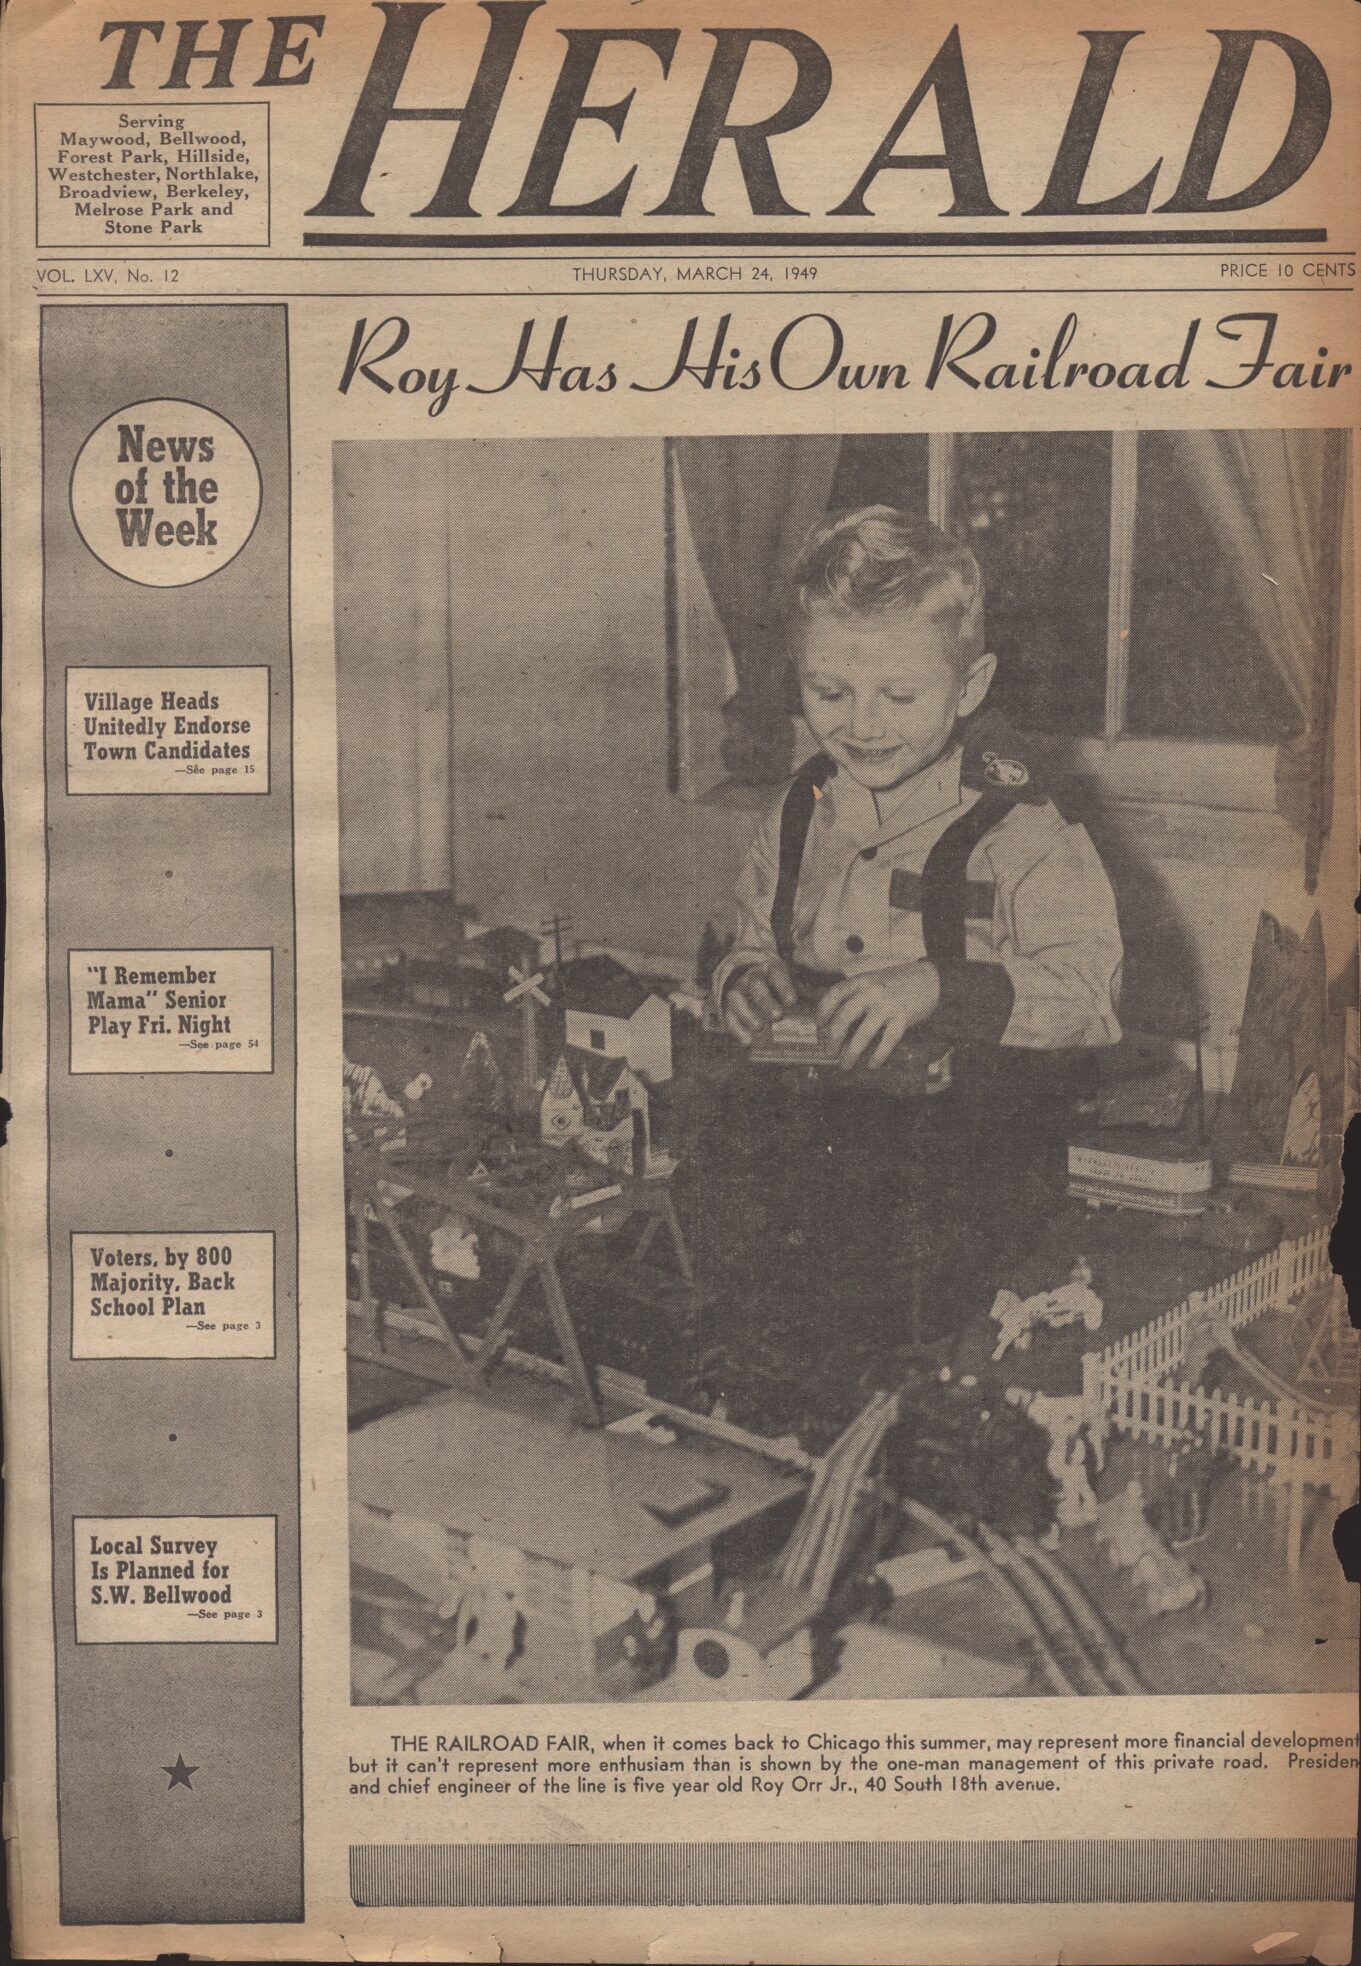 The Herald – 19490324